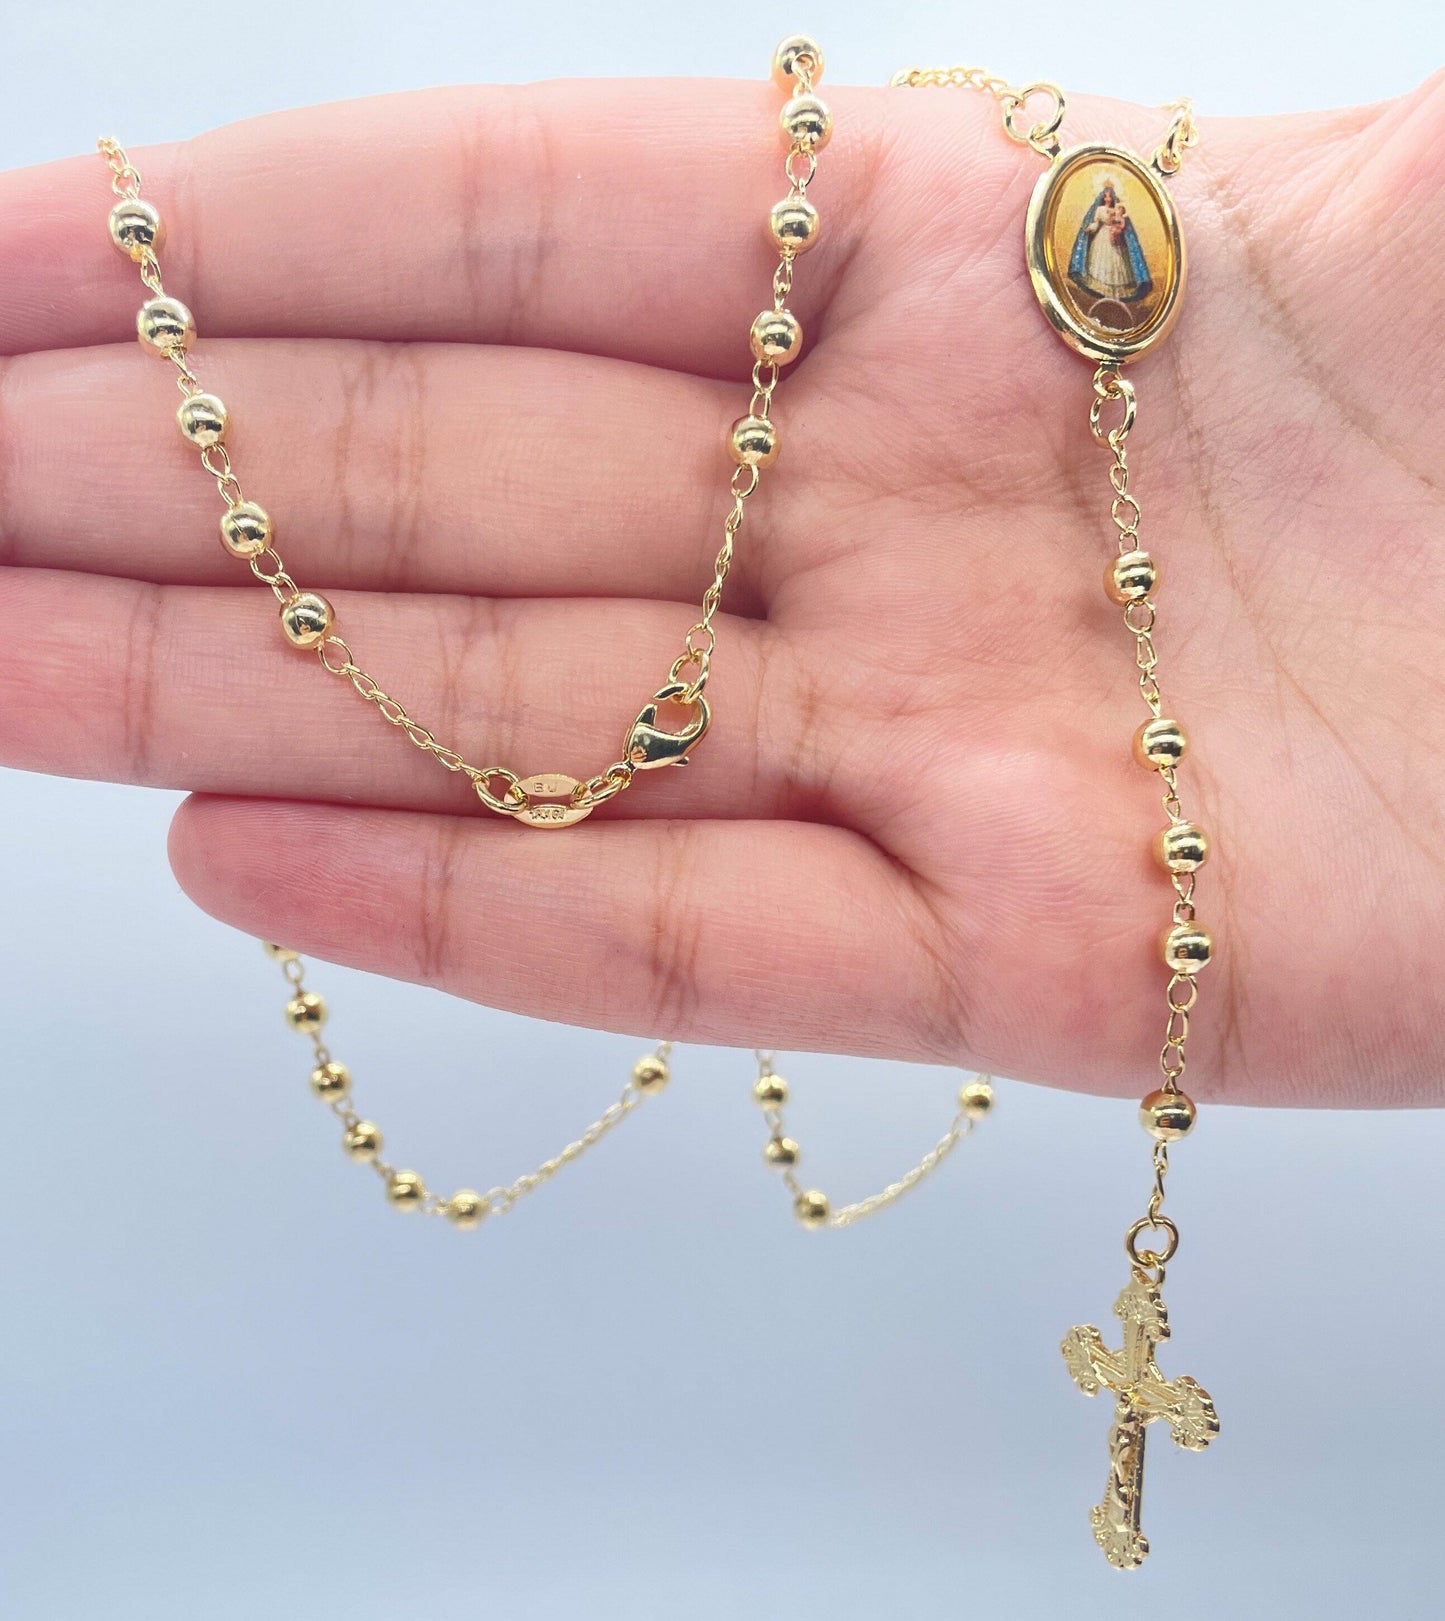 18k Gold Layered Medium Bead Rosary Necklace with Virgin Image Photo Like, Trendy